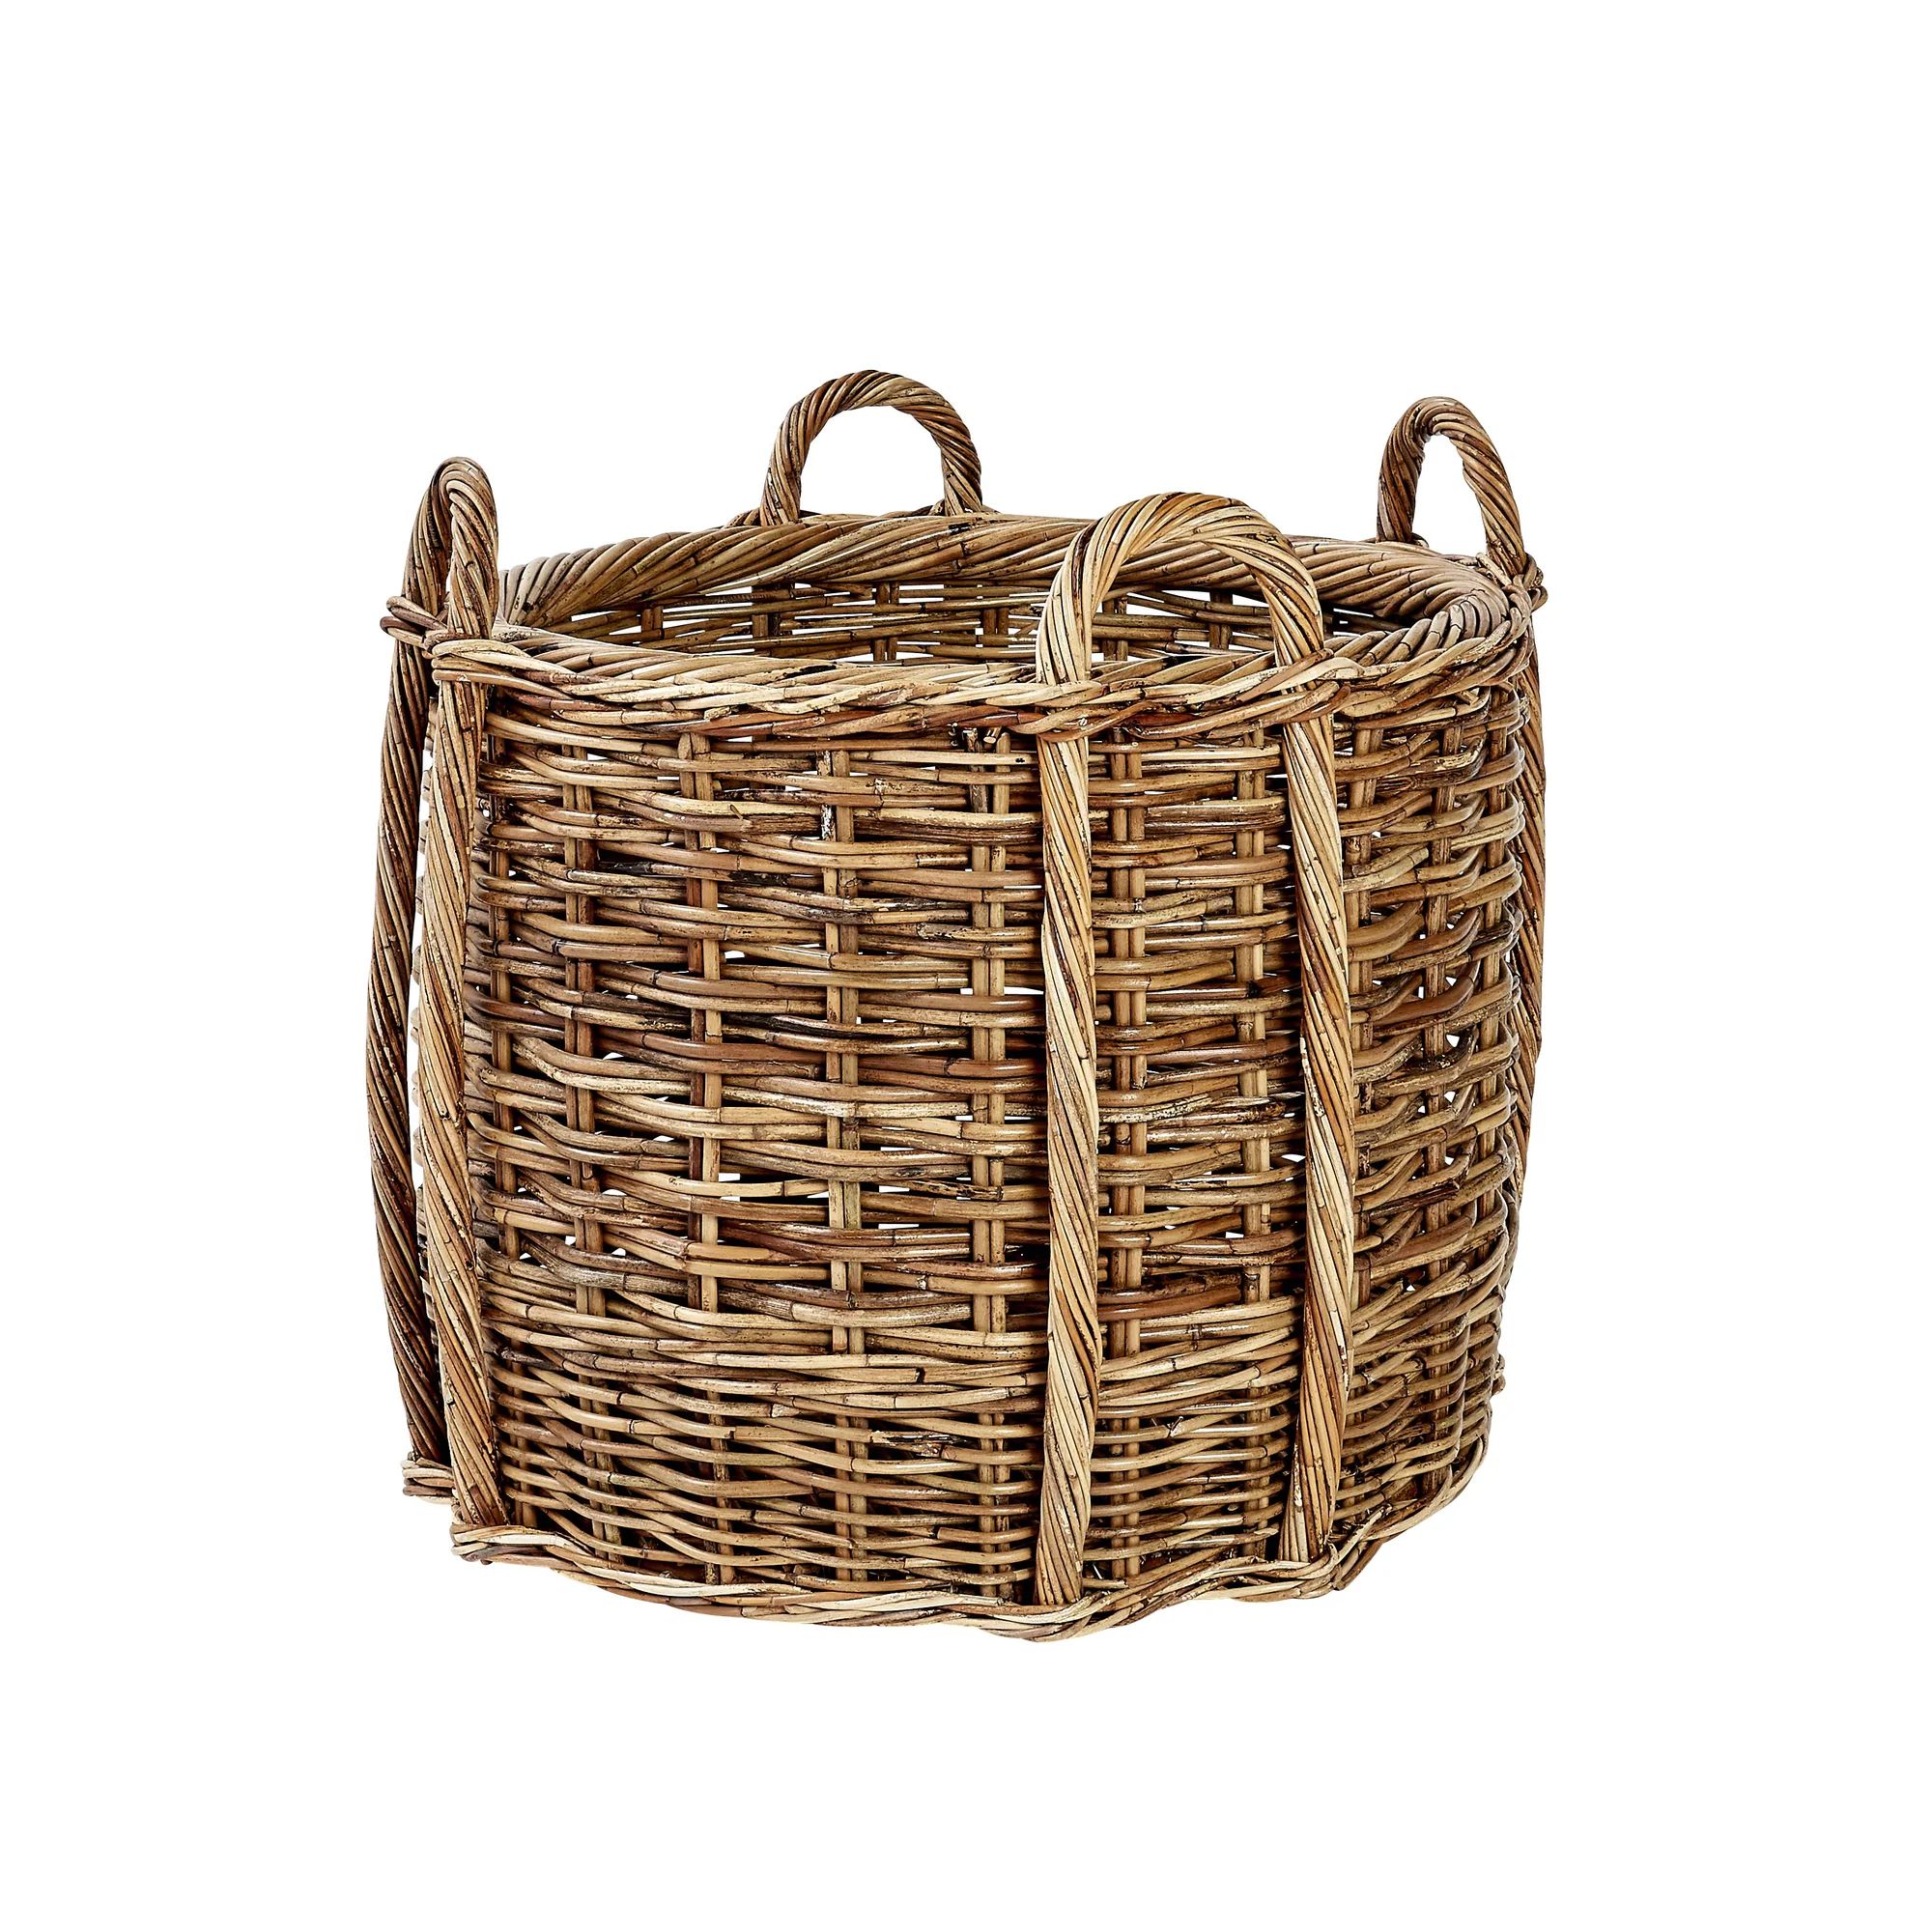 Provencial French Basket | Caitlin Wilson Design